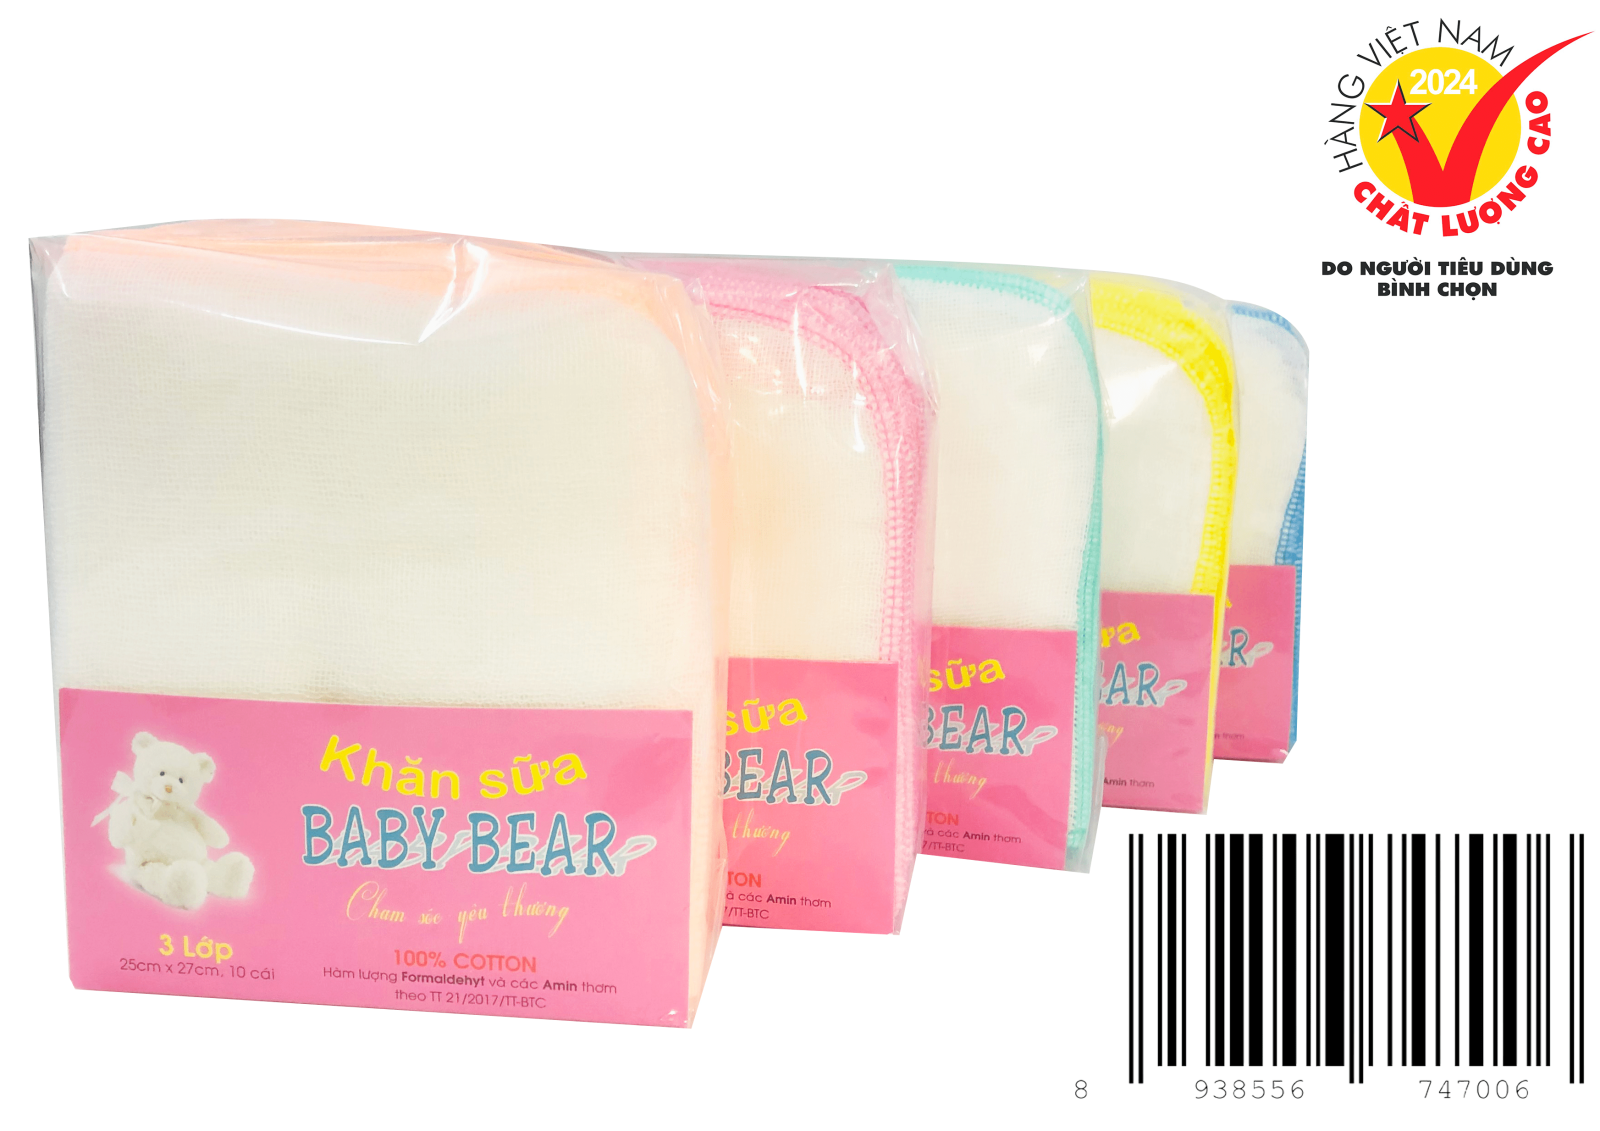 Khăn sữa BabyBear 3 Lớp 10 cái 25 cm x 27 cm